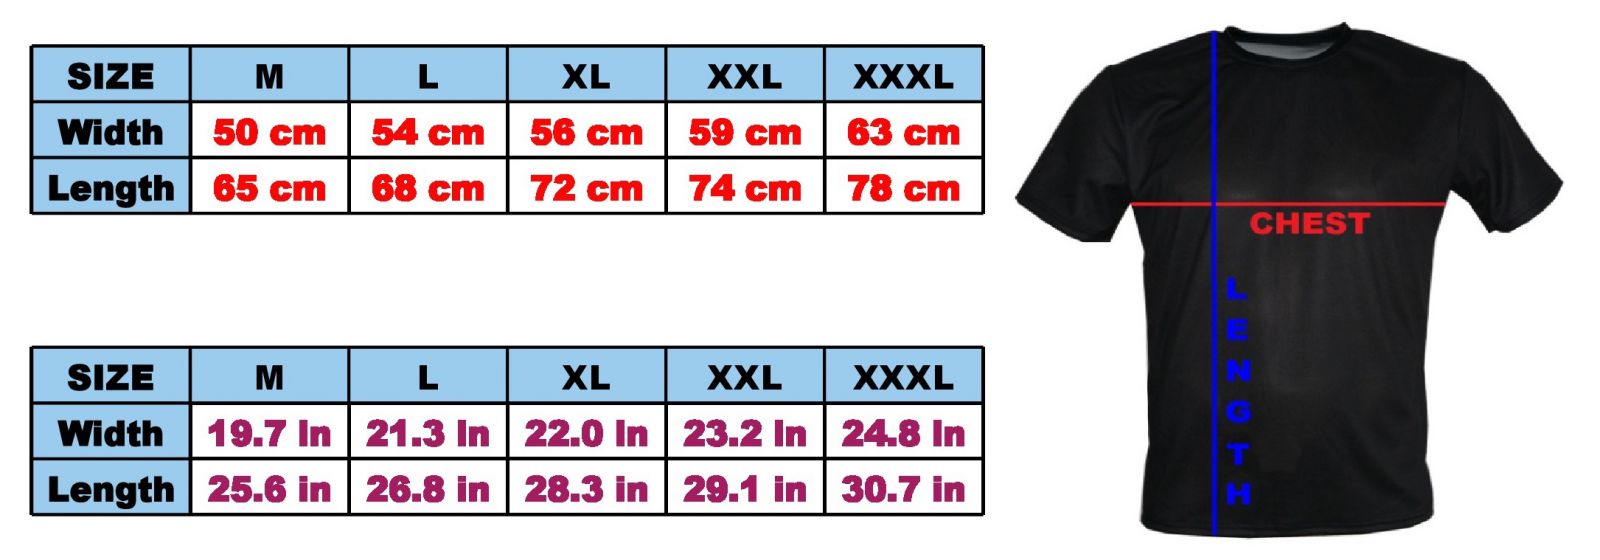 Buy t shirt cm size\u003e OFF-61%